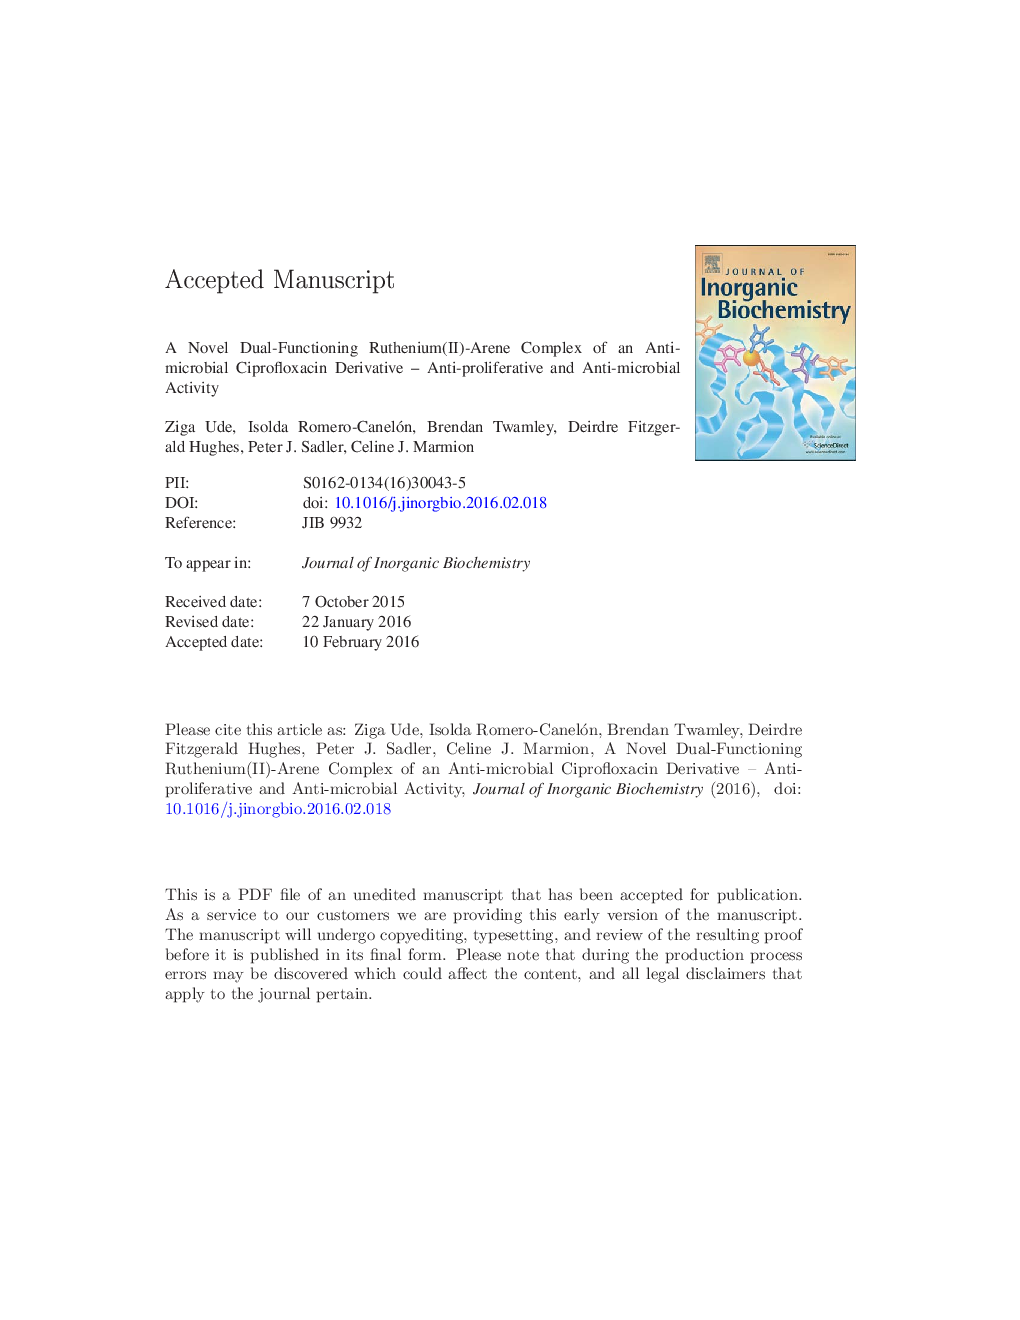 A novel dual-functioning ruthenium(II)-arene complex of an anti-microbial ciprofloxacin derivative - Anti-proliferative and anti-microbial activity